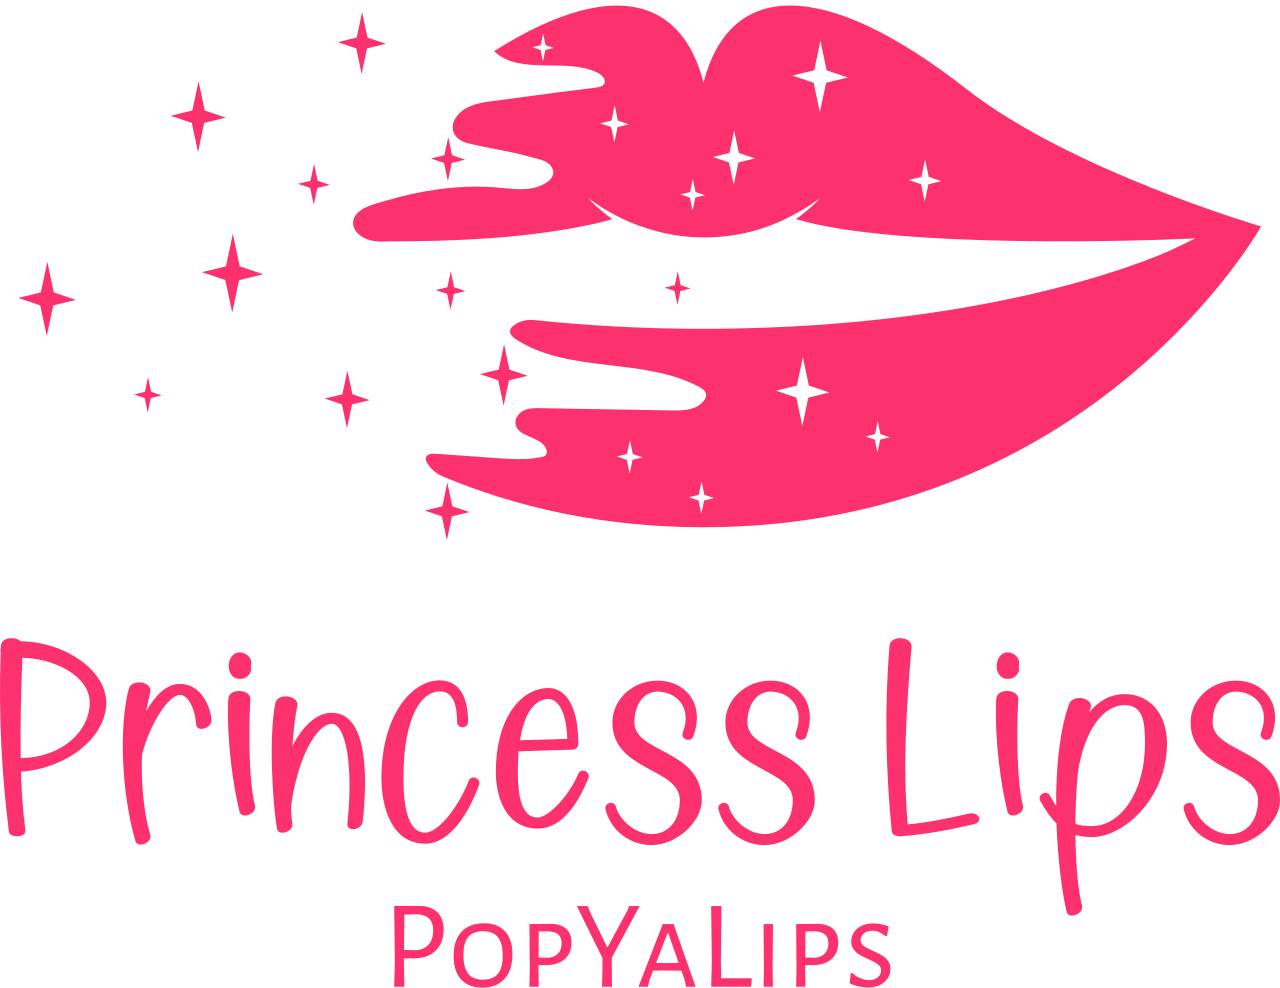 Princess Lips's web page